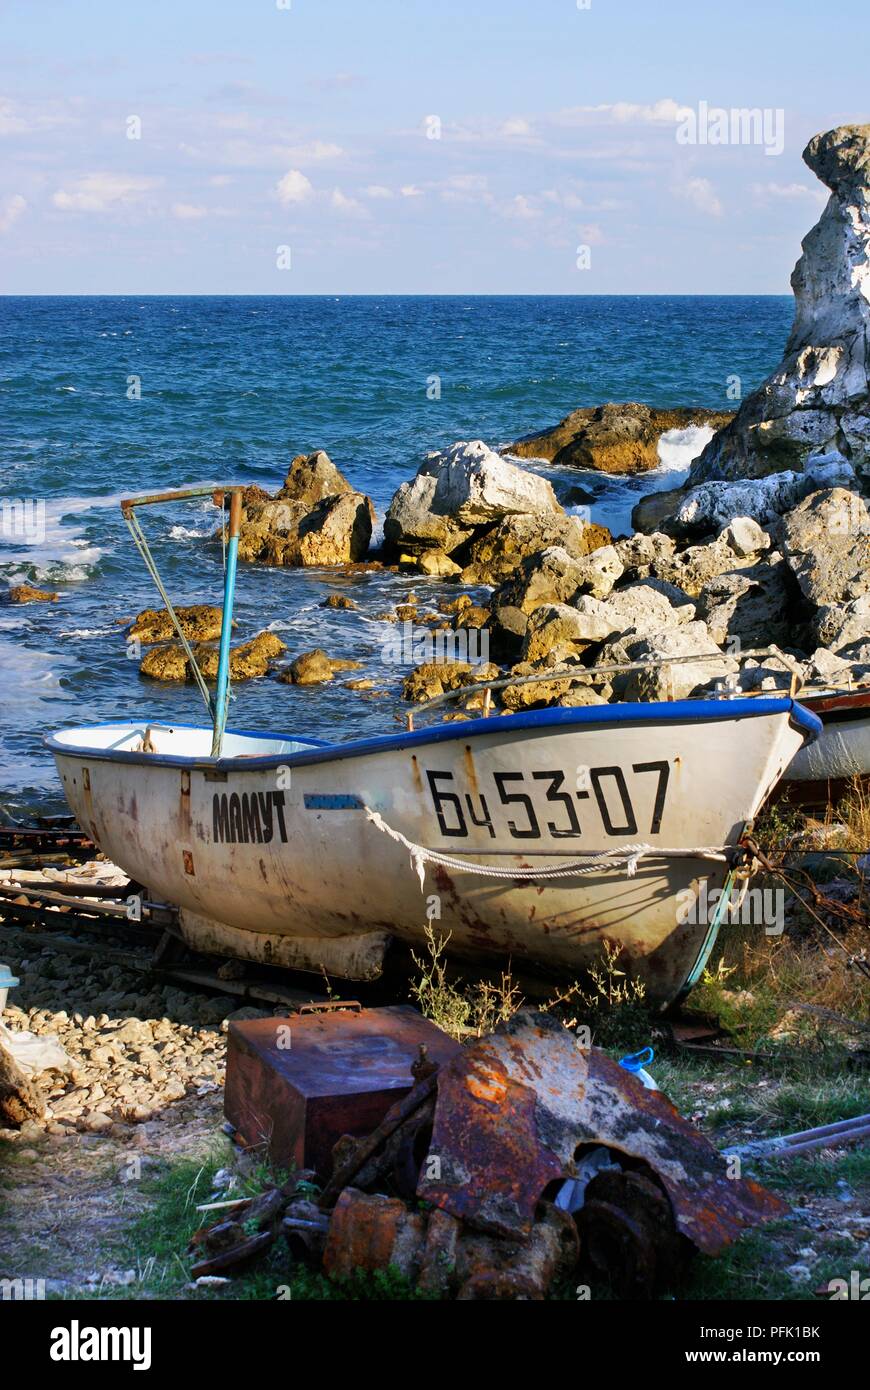 Bulgaria, Tyulenovo, small fishing boat moored on Black Sea coastline Stock Photo